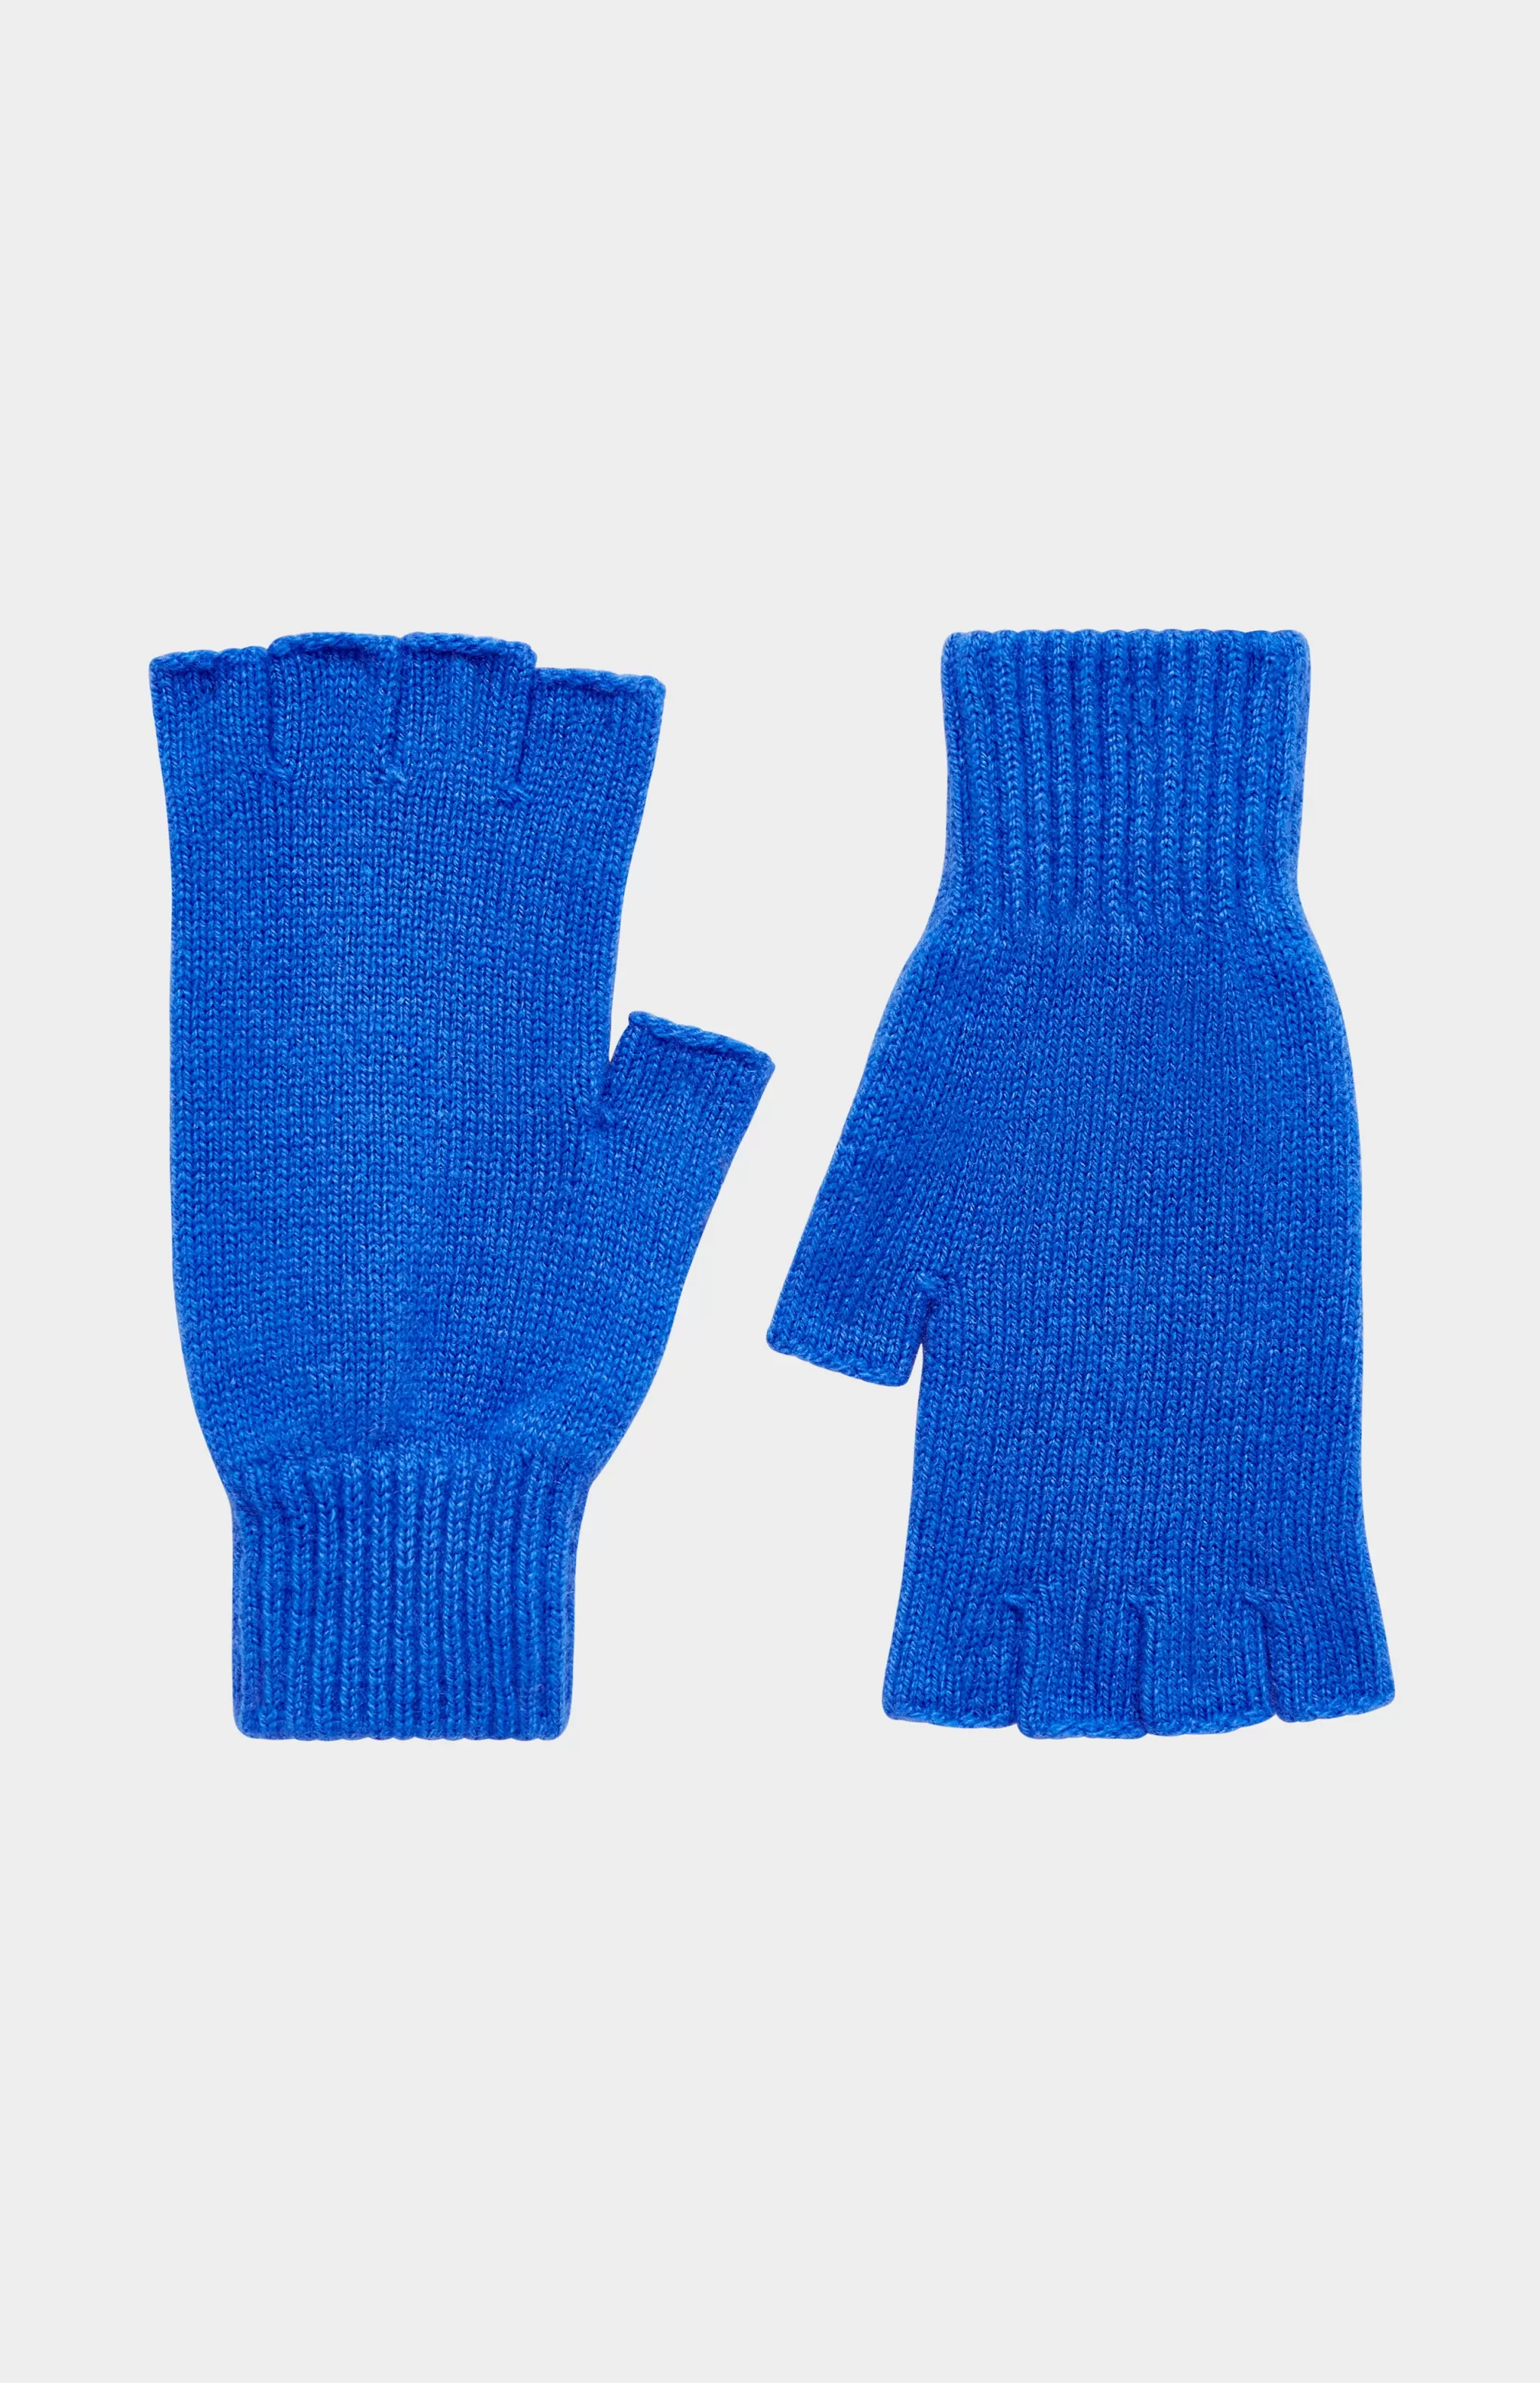 New Cosy Cashmere Fingerless Glove In Sapphire Blue Men/Women Gloves